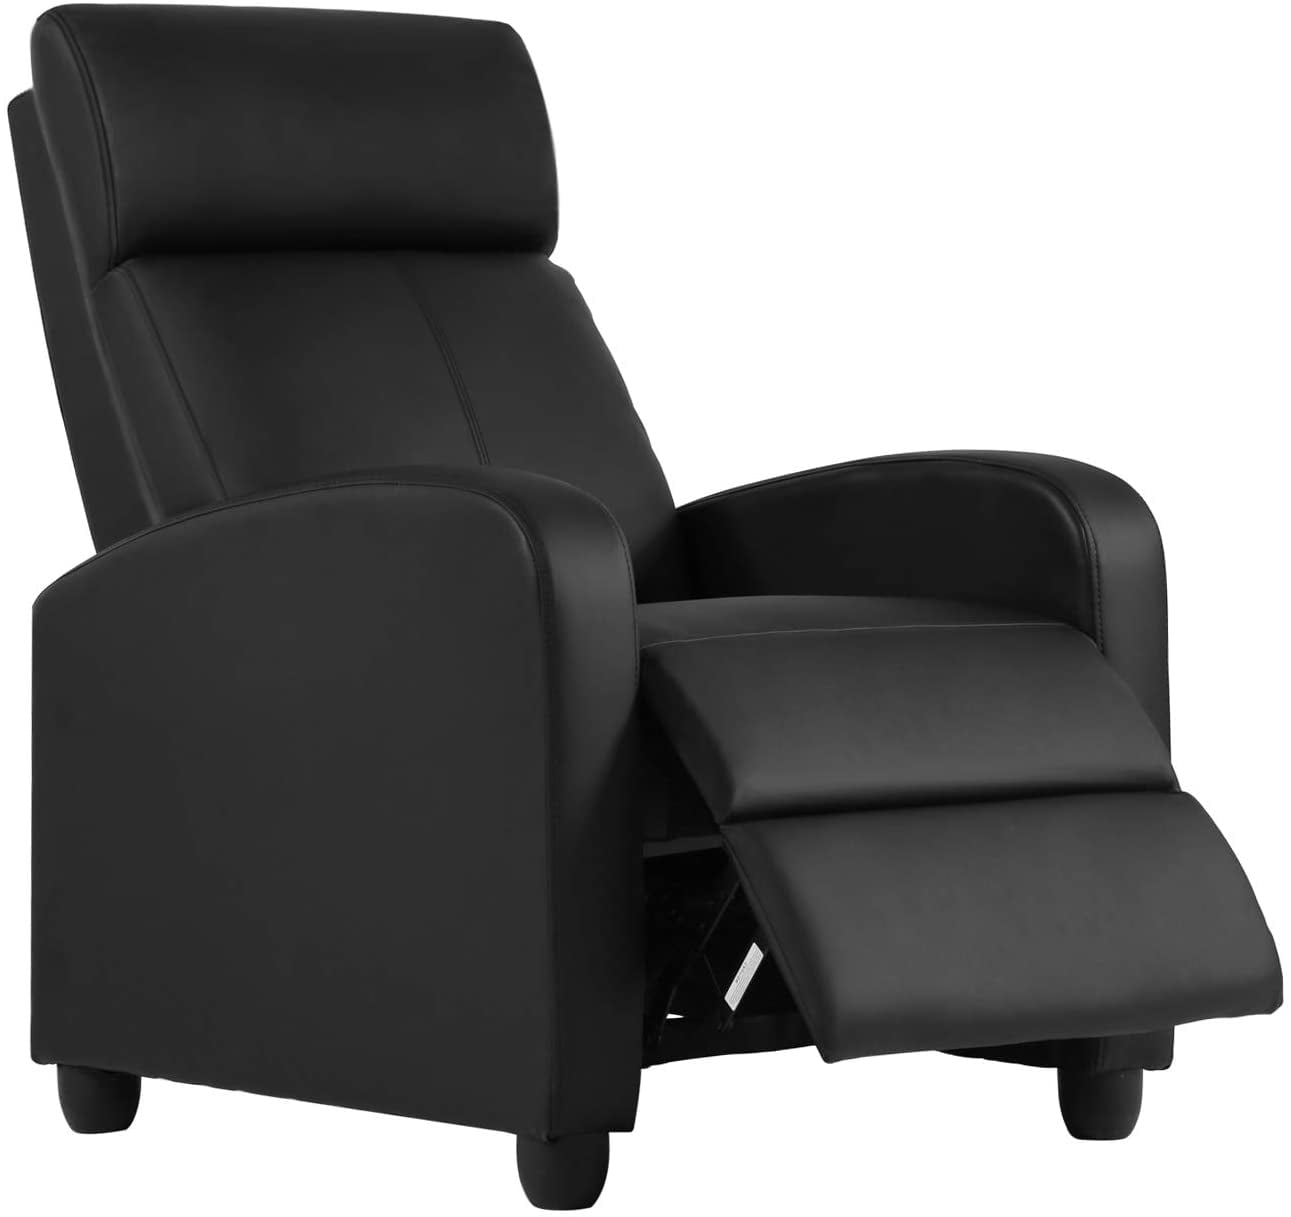 WestWood Bonded PU Leather 1 Seater Cinema Recliner Sofa Chair Armchair Livingroom Bedroom Furniture RS04 Black 